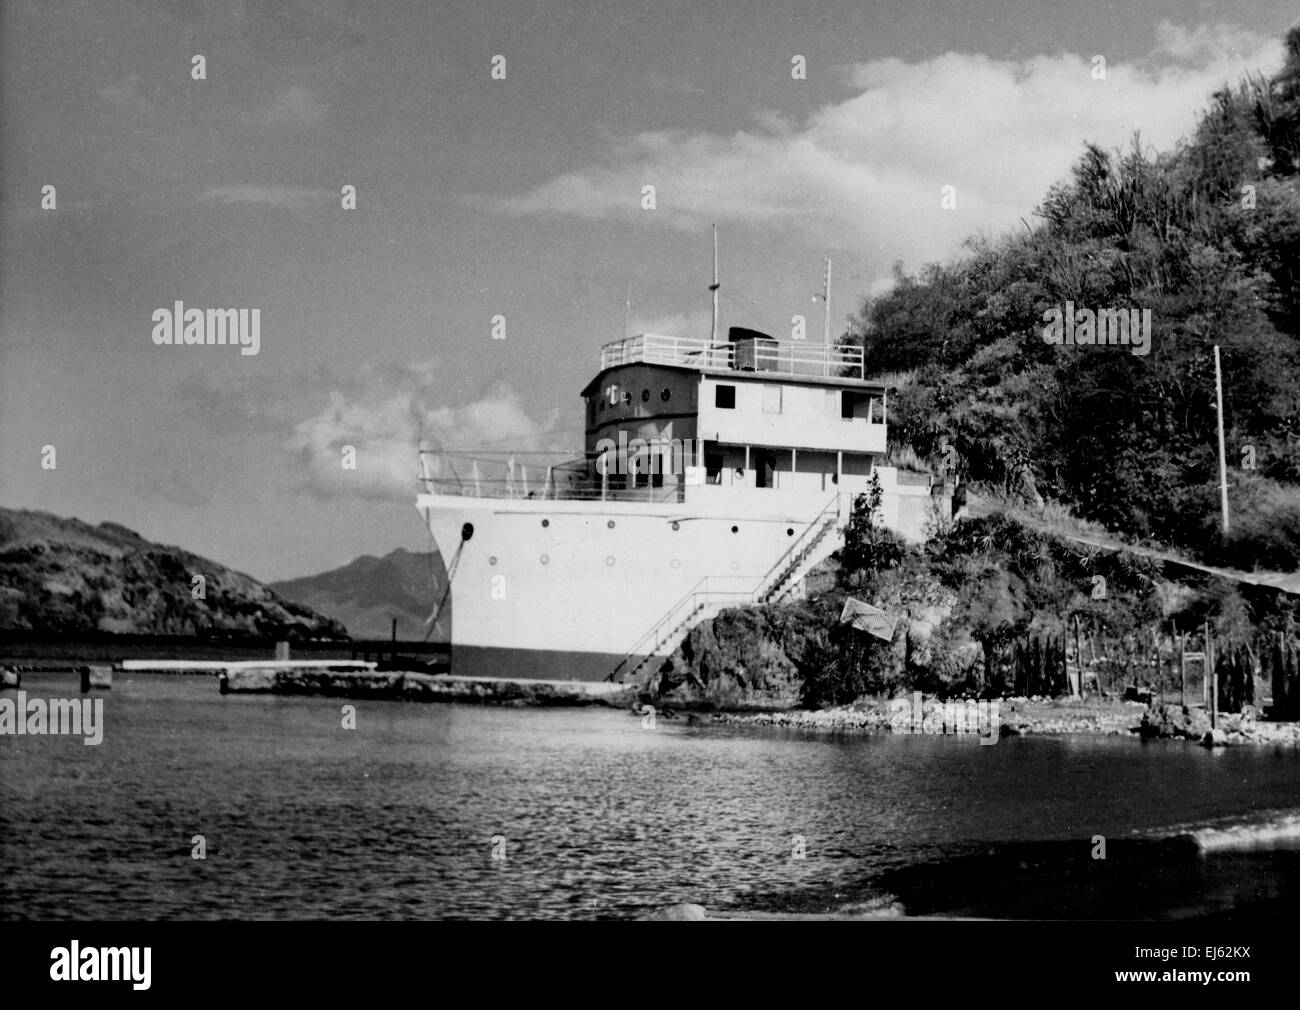 AJAXNETPHOTO. 1950S. LES SAINTES, West Indies. - Casa construida para representar buque. Foto; REG CALVERT/AJAX ©AJAX Noticias & FEATURE SERVICE/REG CALVERT colección Ref:1950 BW013 Foto de stock